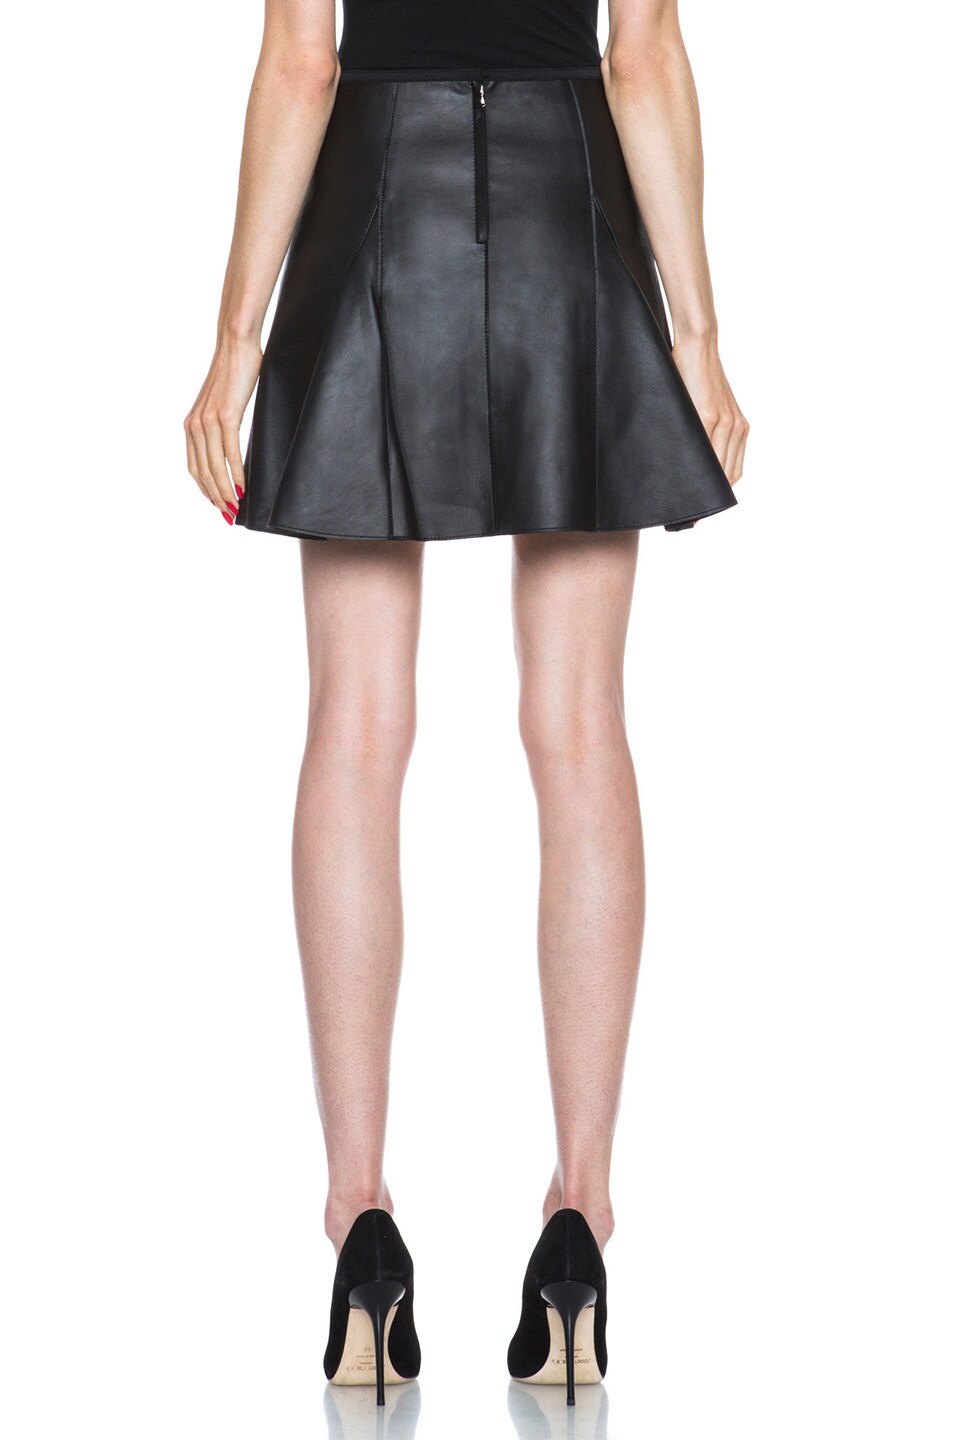 3.1 phillip lim Peplum Flare Lambskin Leather Skirt in Black | FWRD